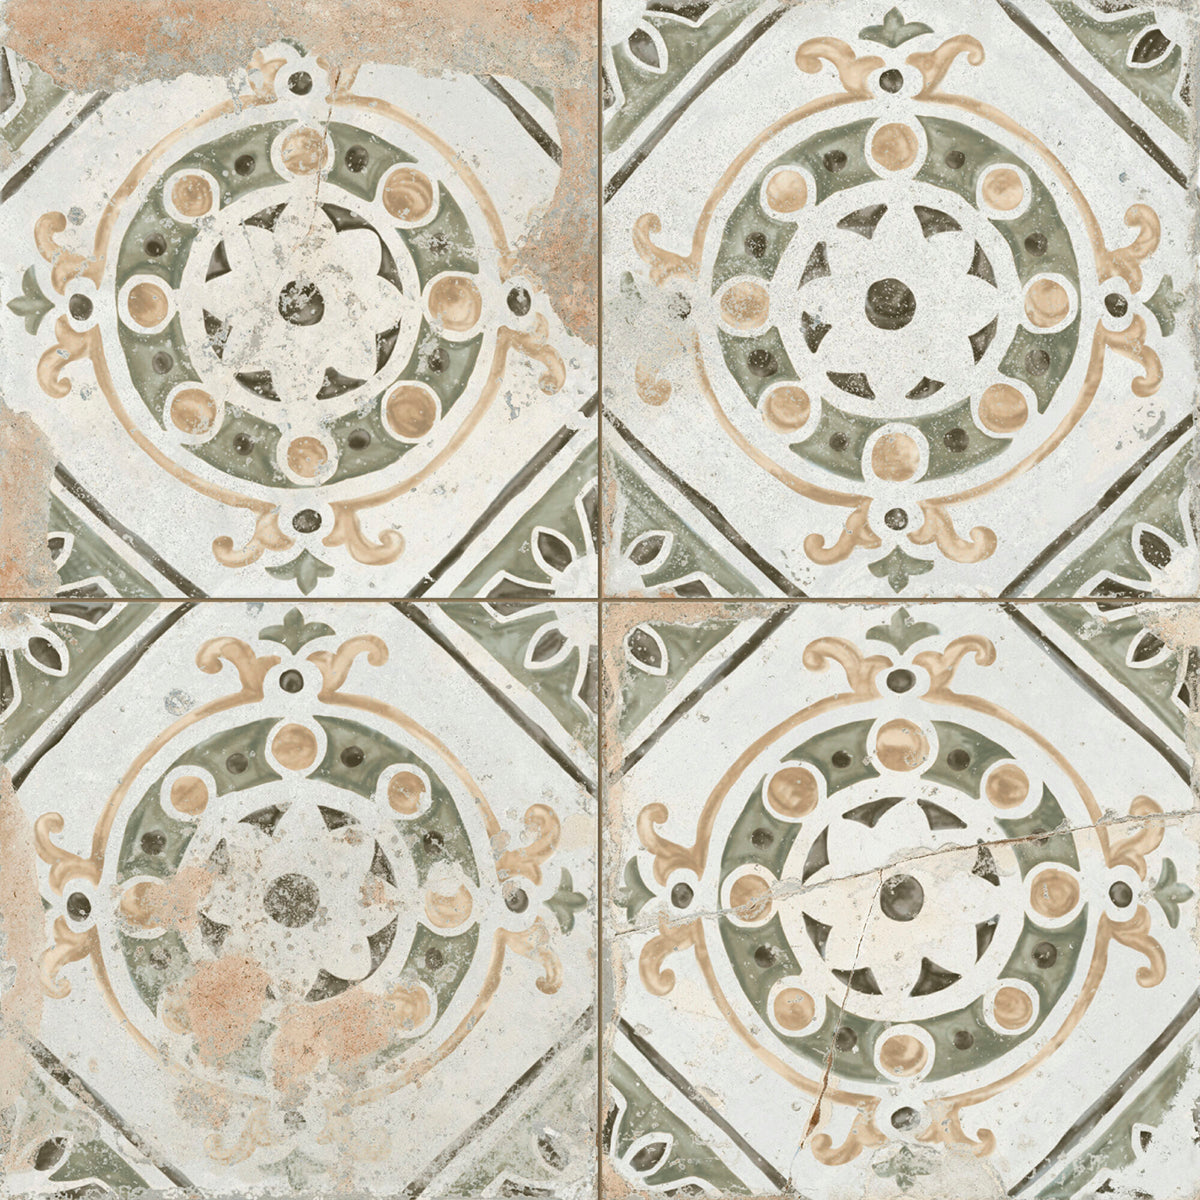 Santa Fe Patterned Ceramic Tiles